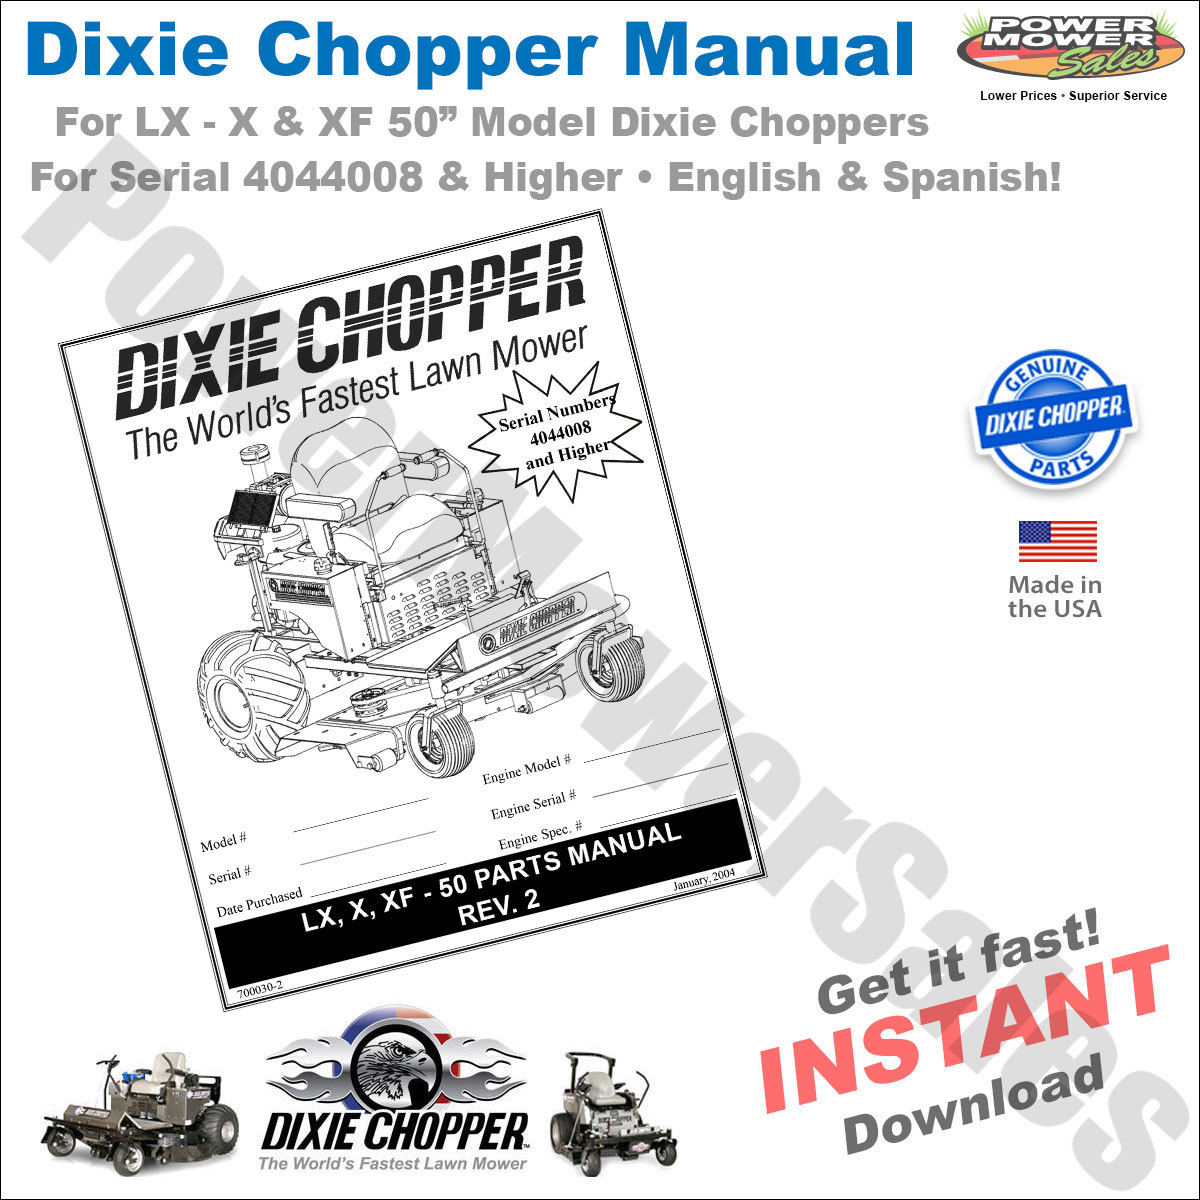 Dixie Chopper Belt Diagram Dixie Chopper Manual For Lx X Xf 50 Digital Download Dc Lx50 Man Power Mower Sales